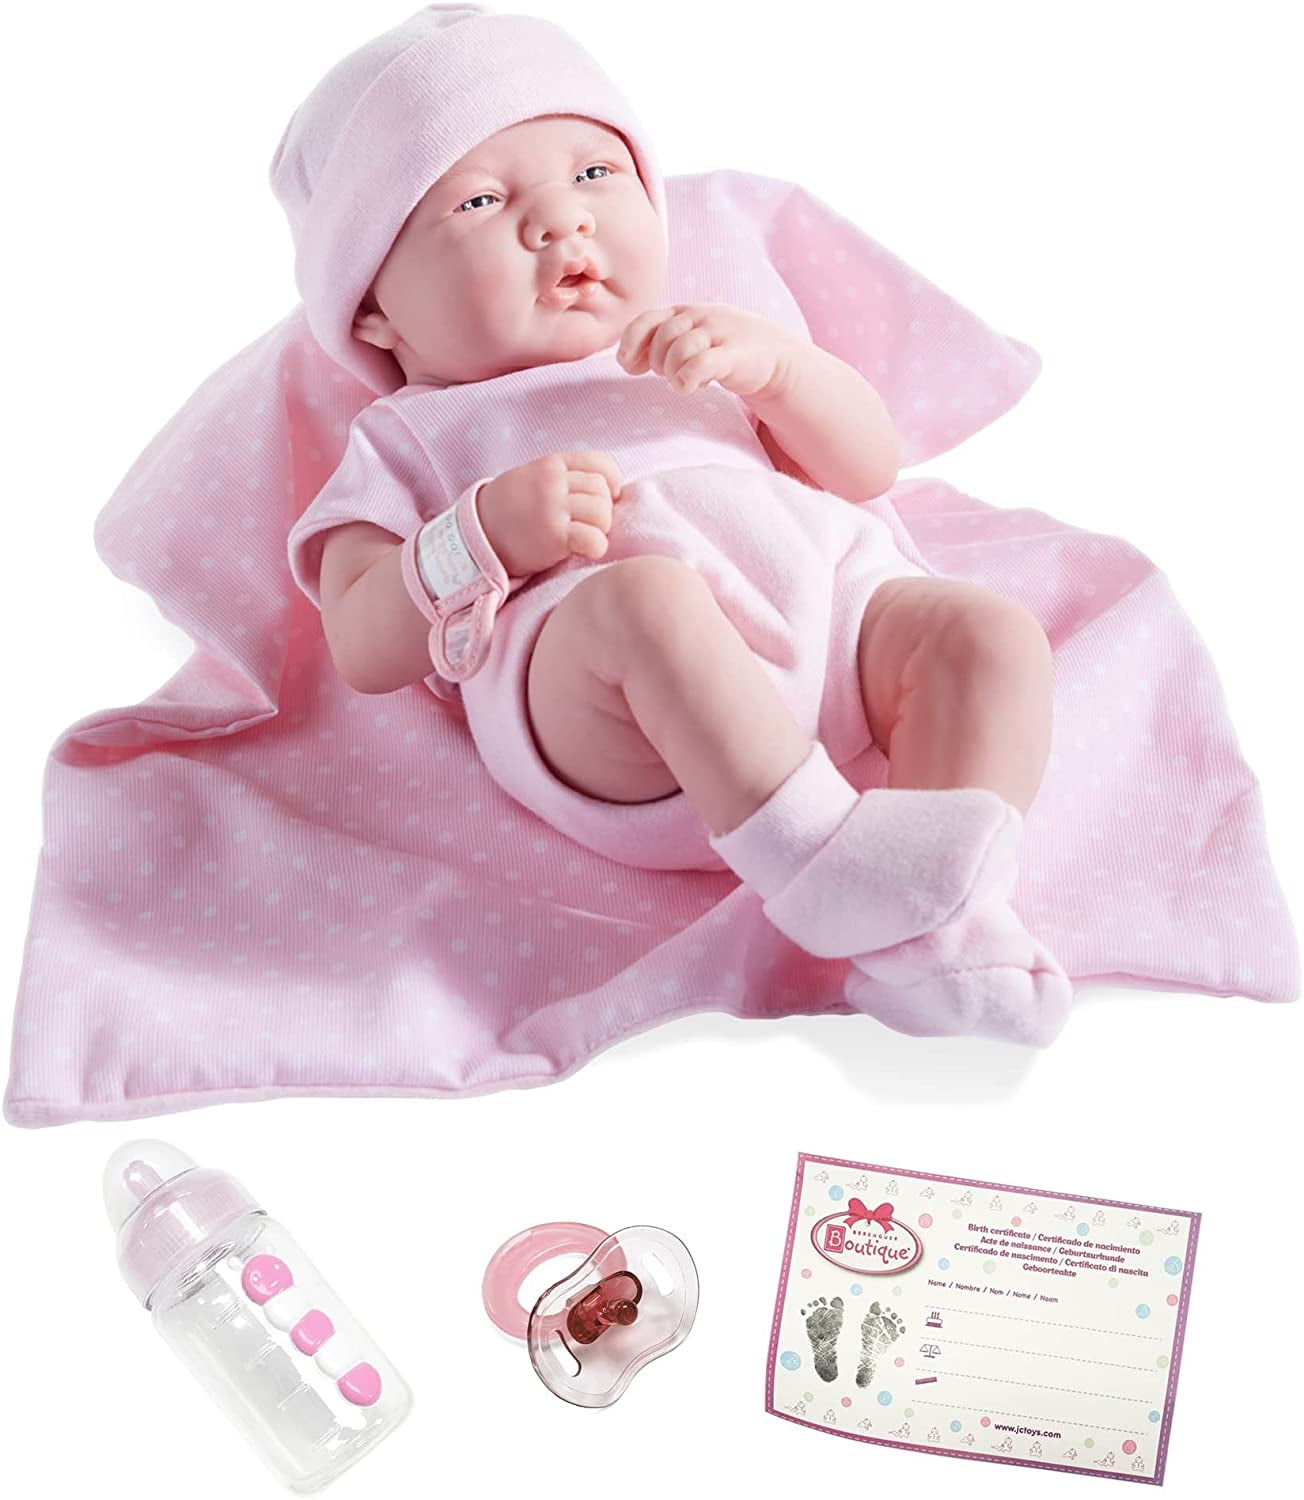 JC Toys LA NEWBORN 15.5" BERENGUER BABY GIRL GIFT SET Doll Pacifier NEW 18781 